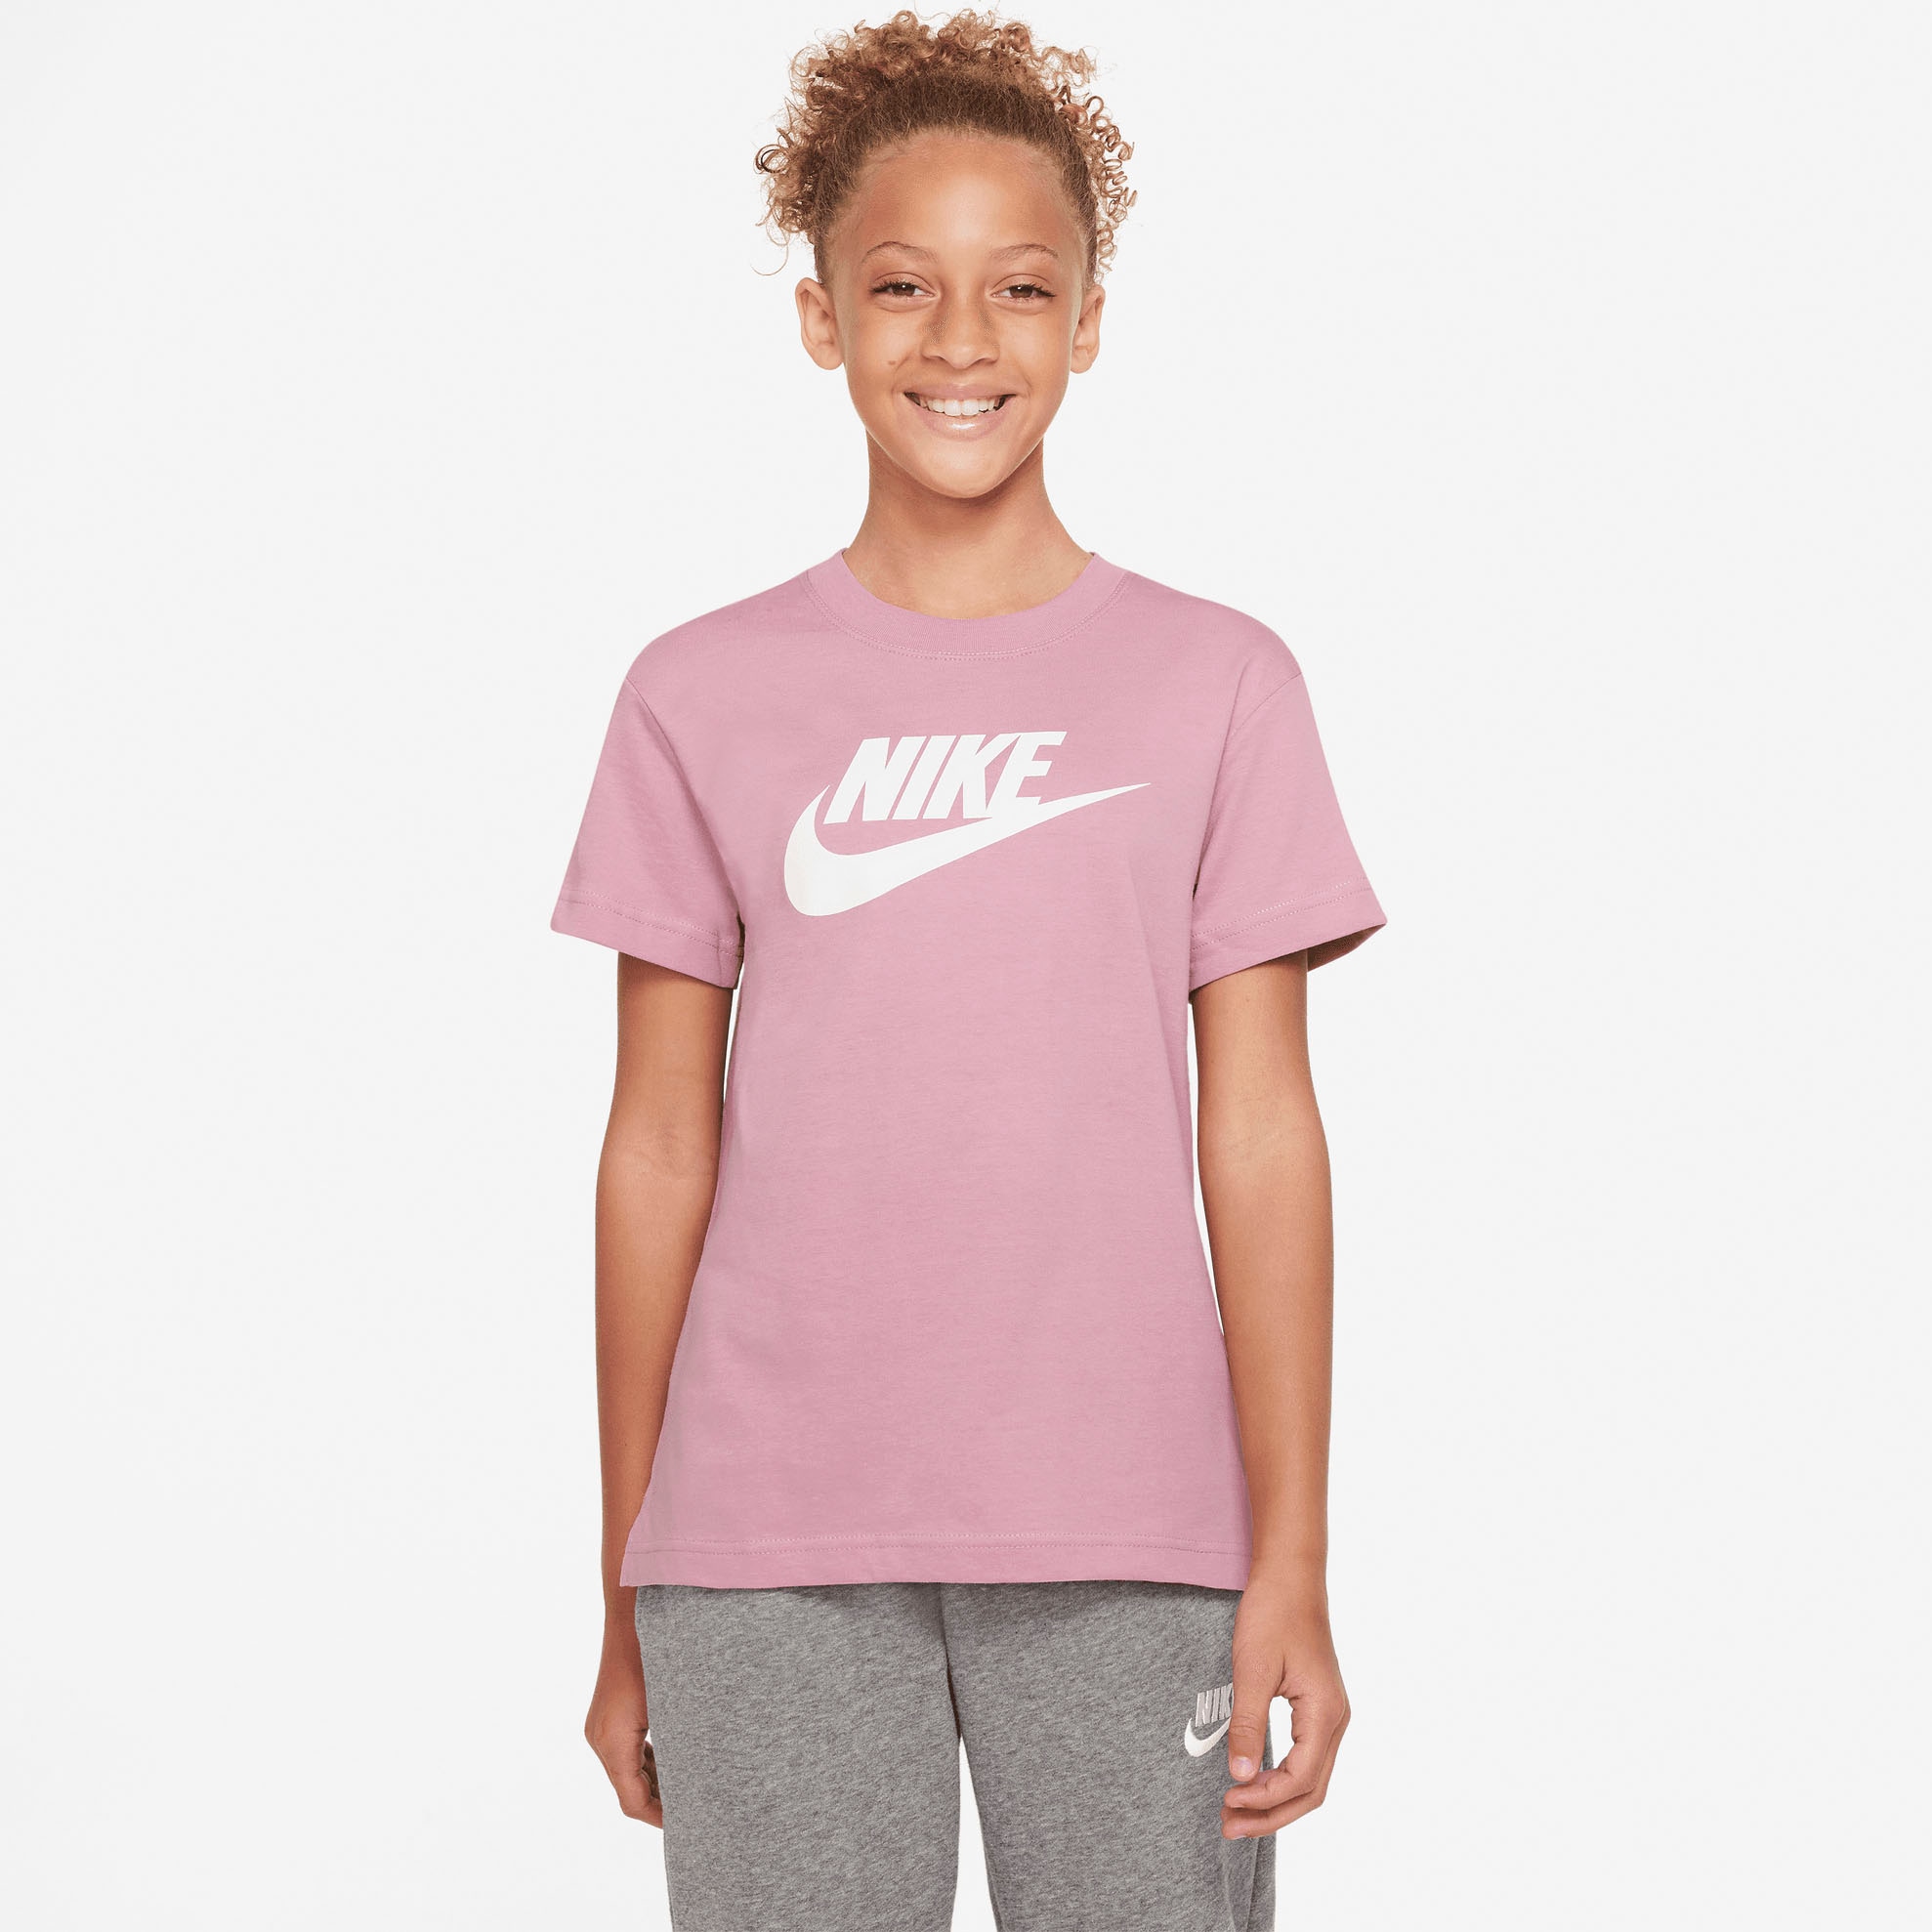 Nike Unisex Kinder G NSW Dptl Basic Futura T-Shirt, Elemental Pink/Weiß, XL (156-166cm)